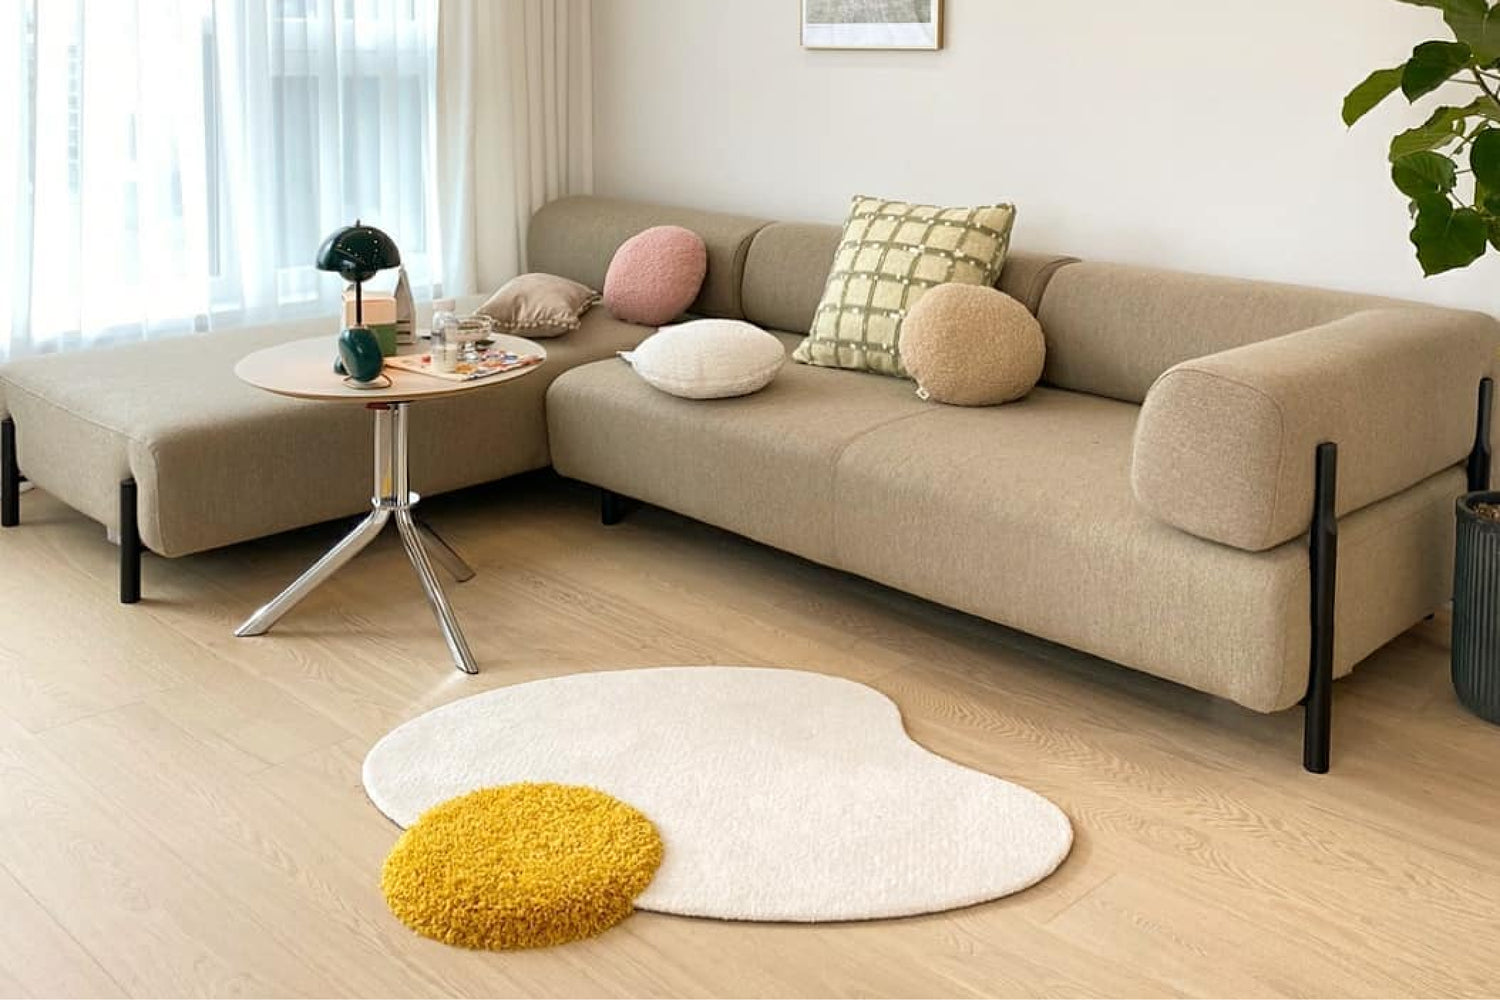 Hem - UGC of a living room scene featuring Palo Modular Corner Sofa Left in Beige.